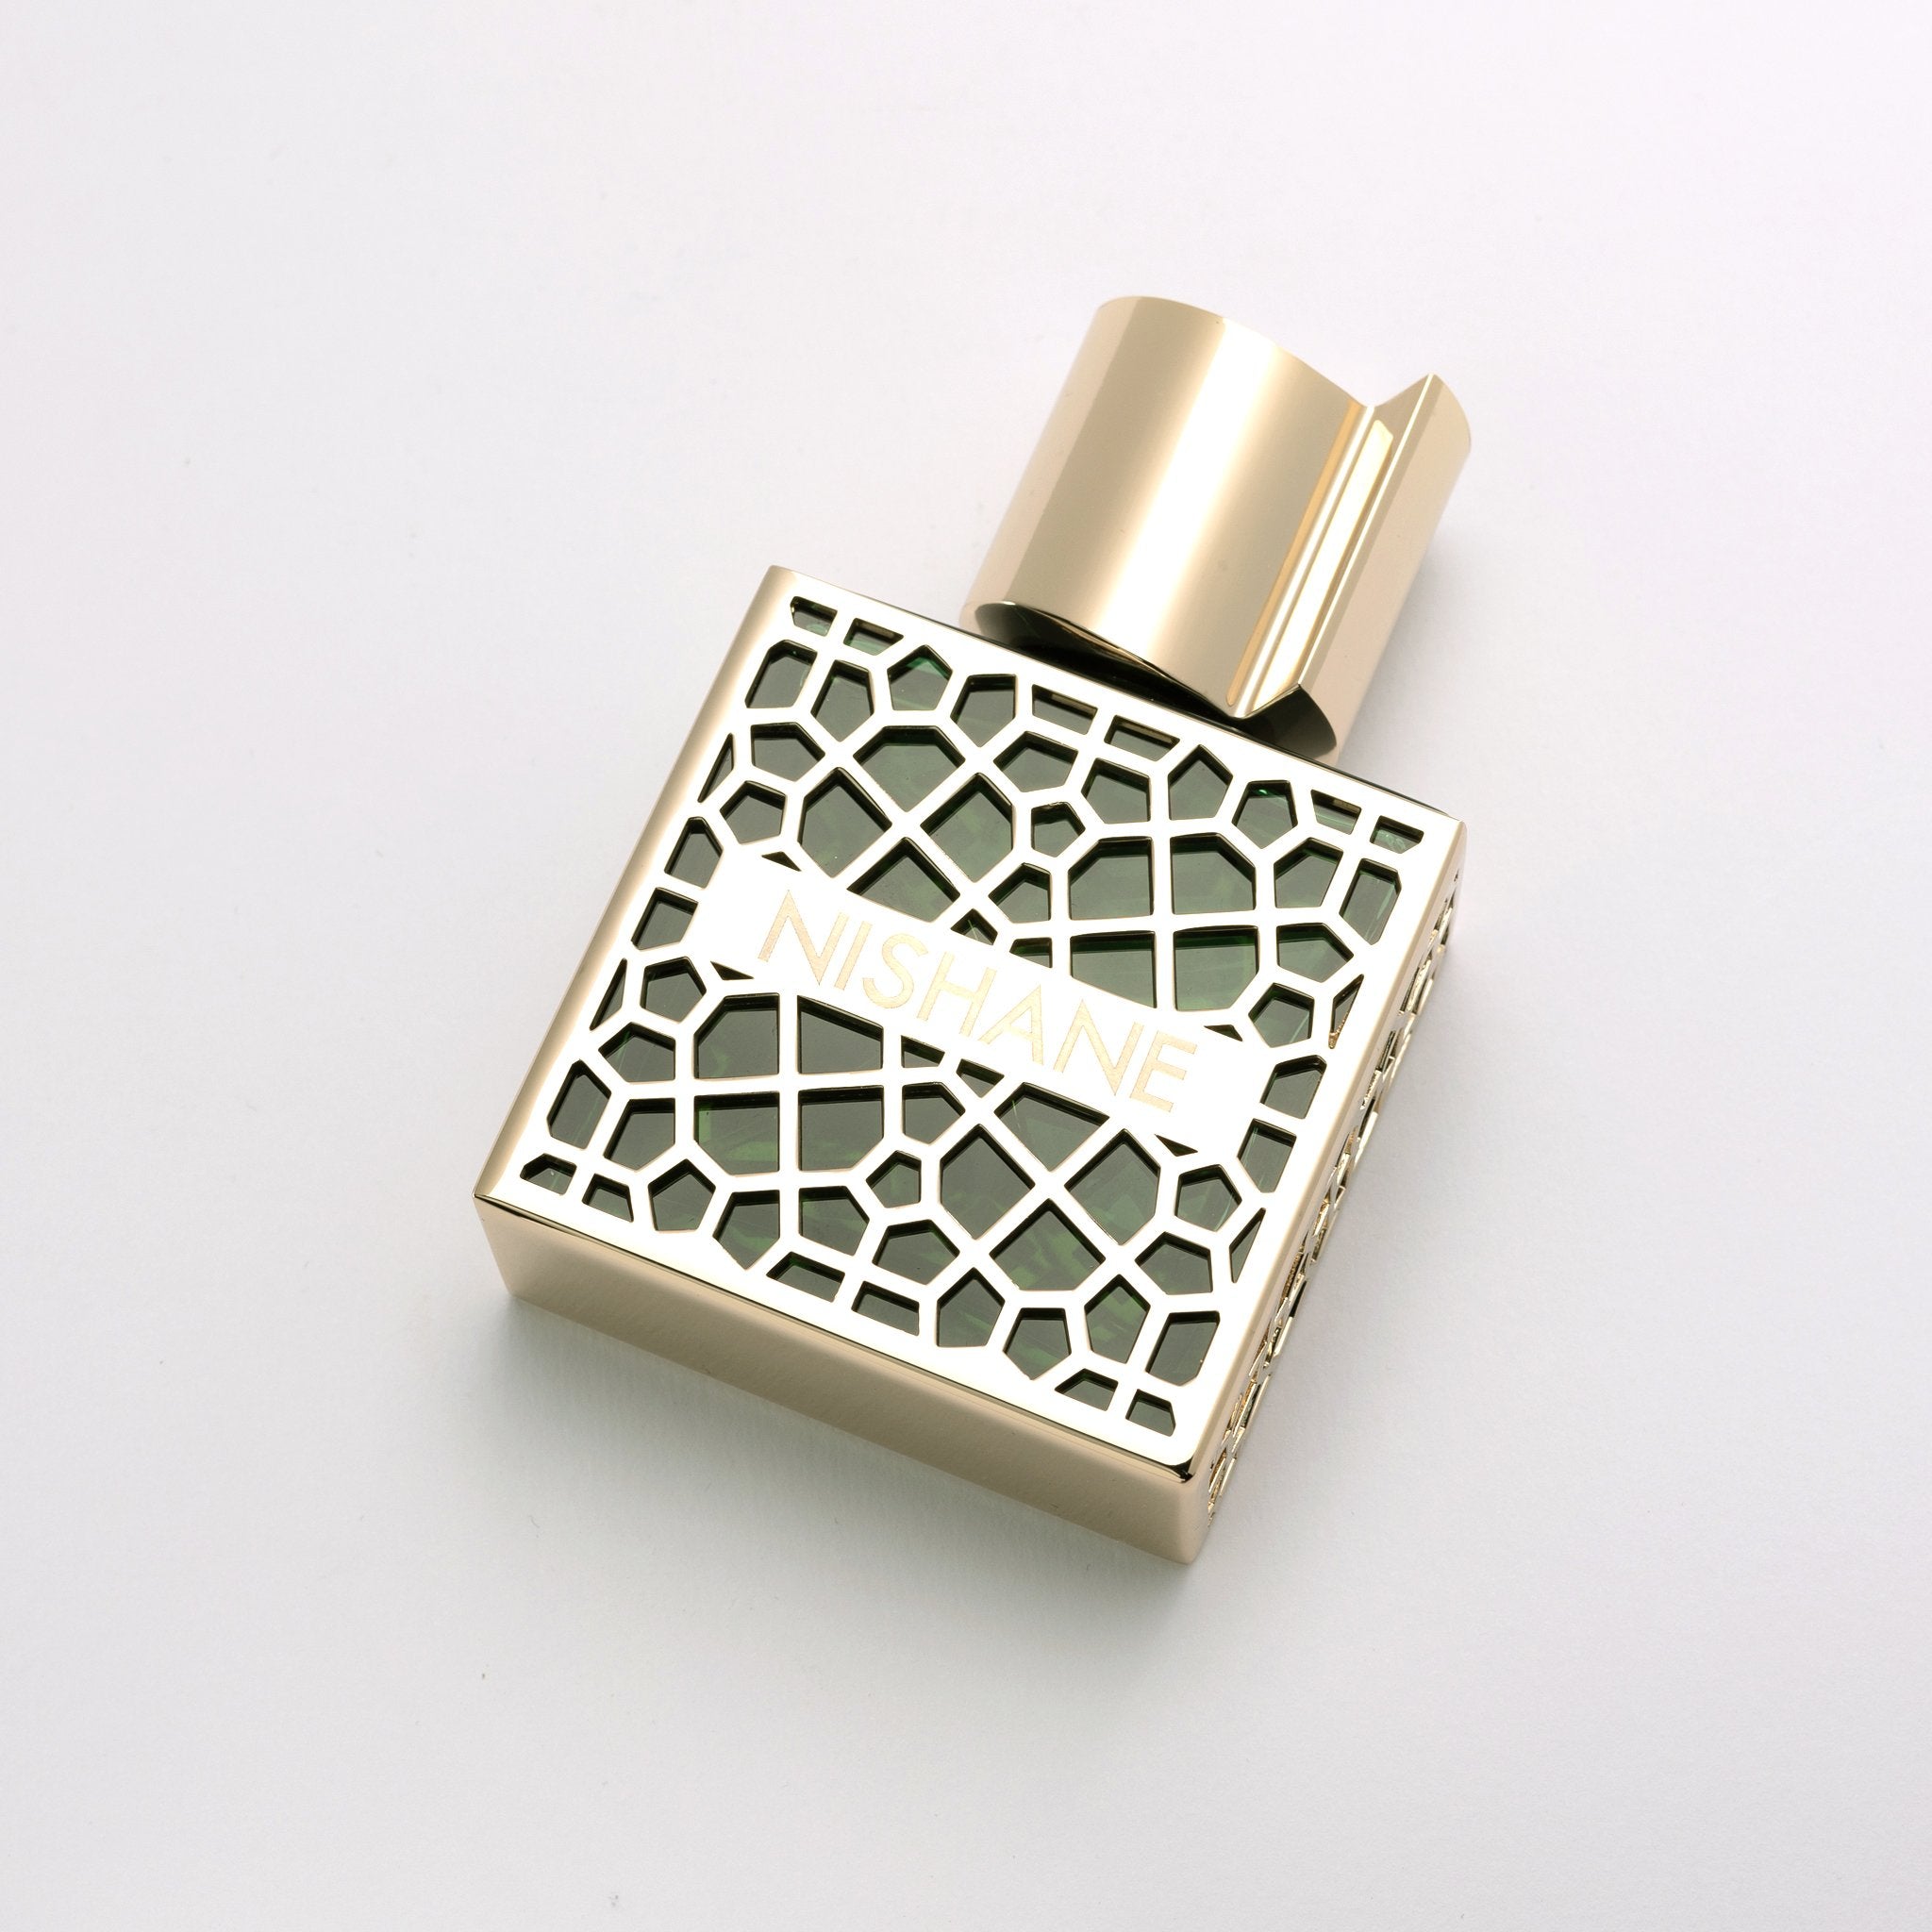 Mana – OTRO perfume concept